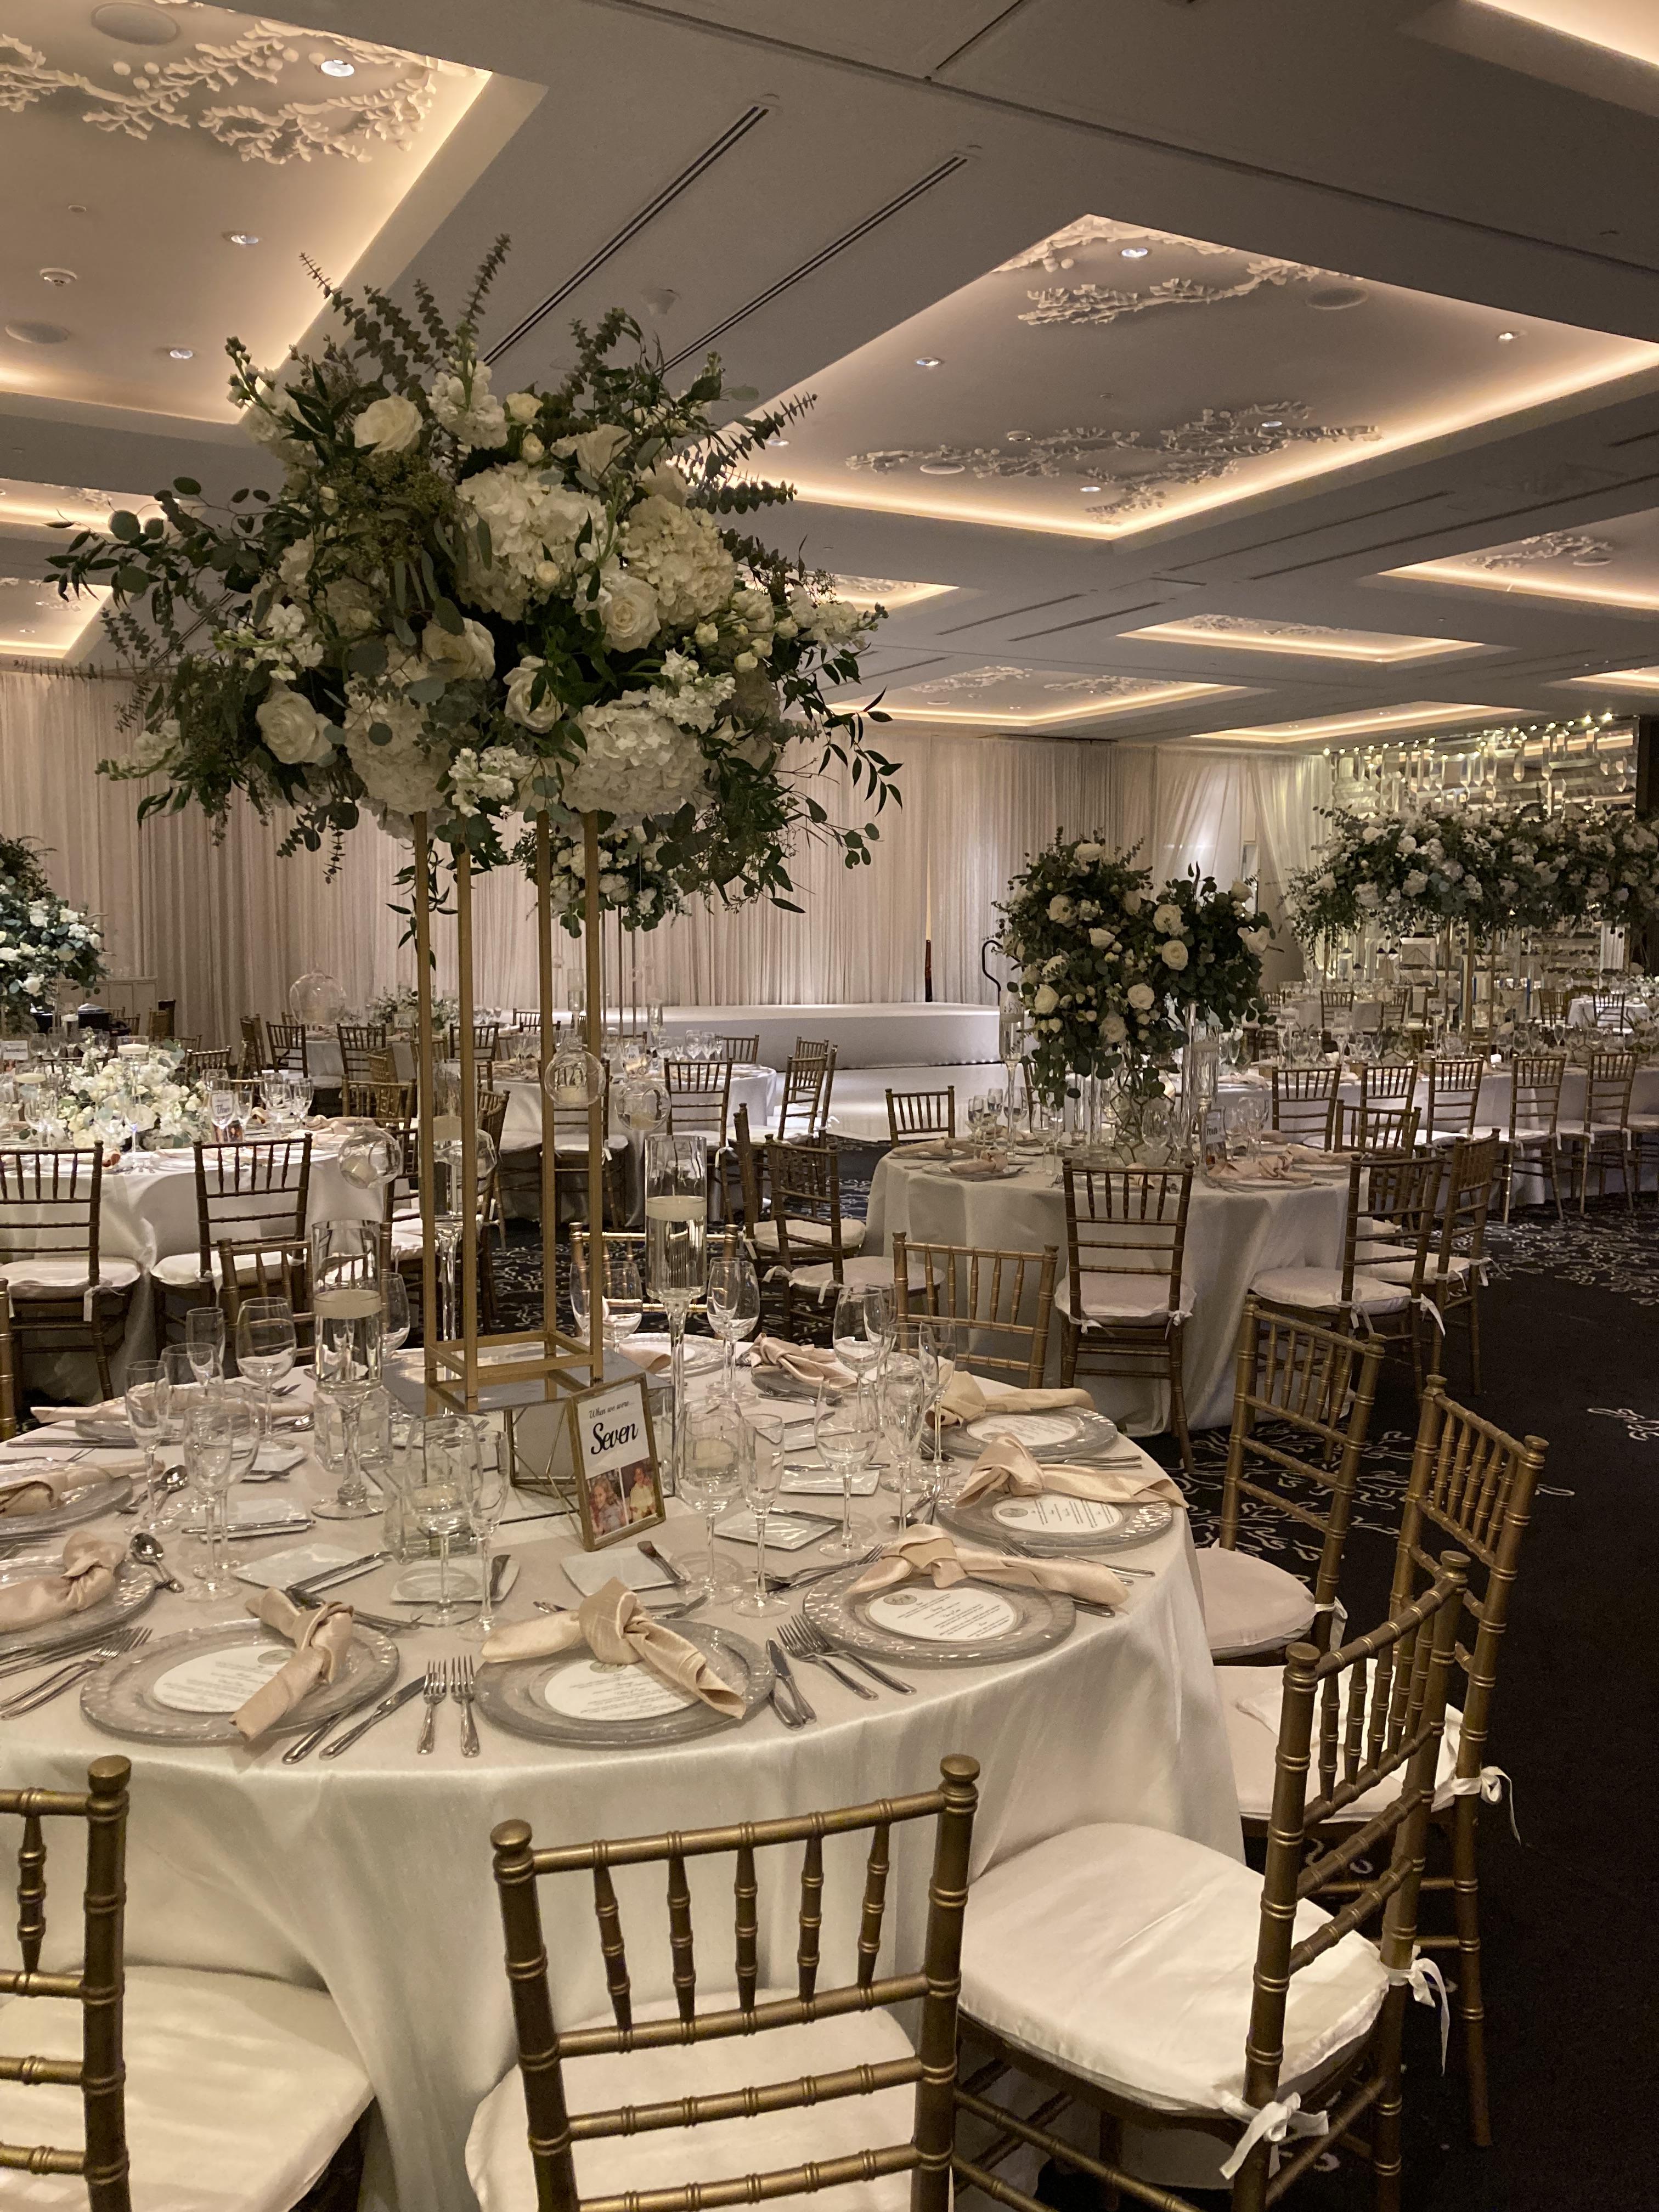 Wedding Reception, Simple, Italian, Chivari Chairs, Wedding Planner, Wedding Coordinator